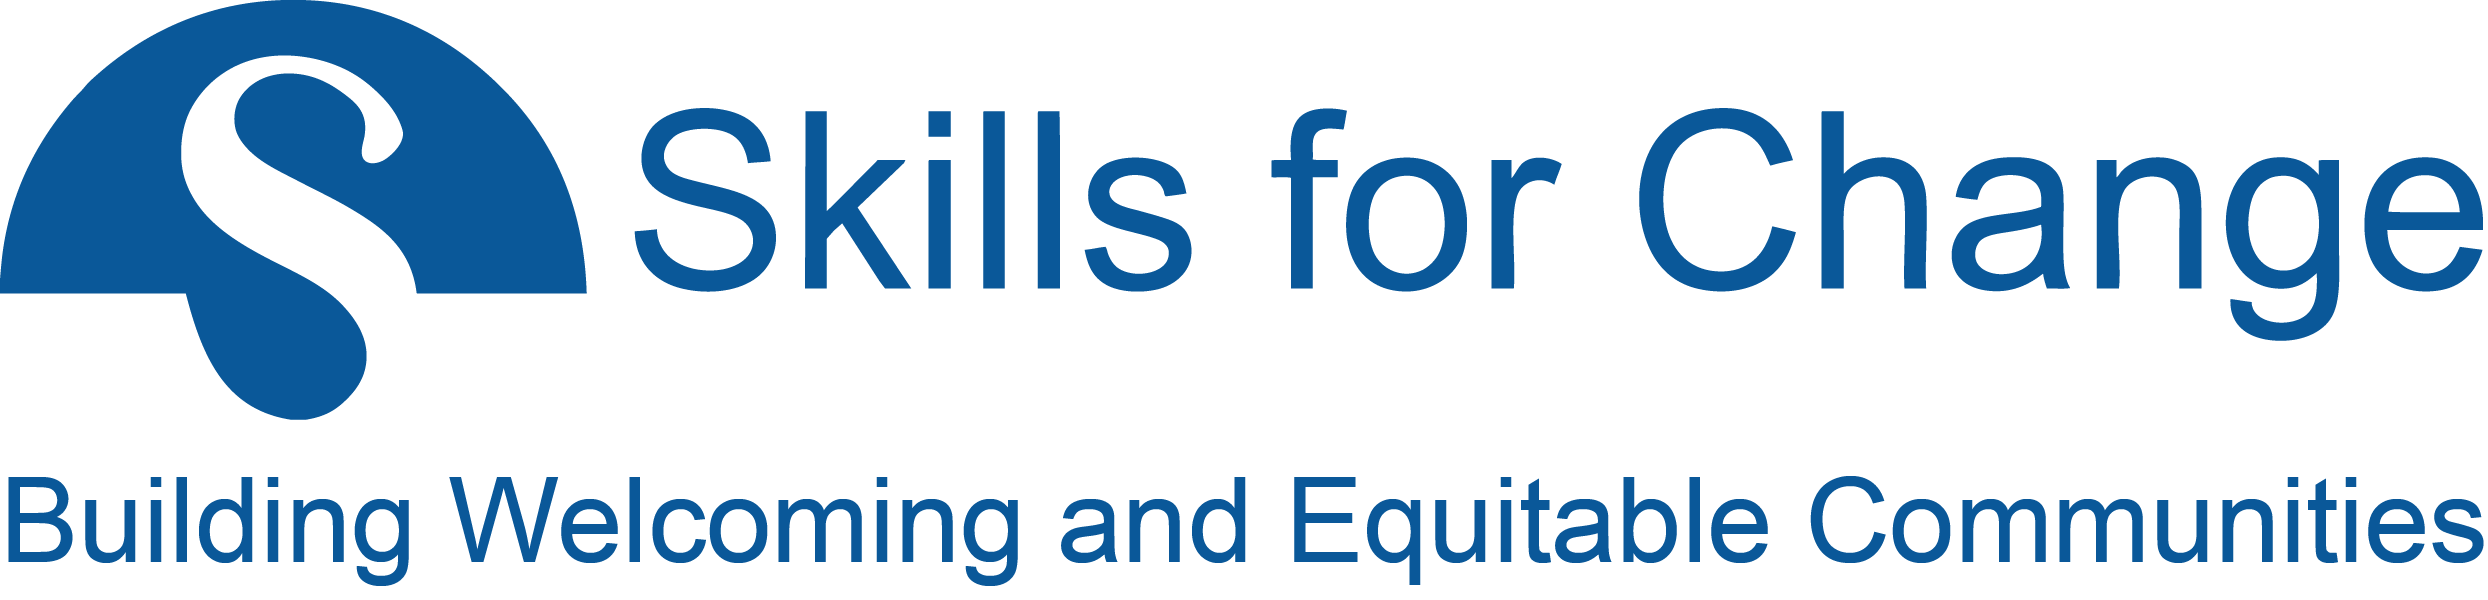 Skills for change logo